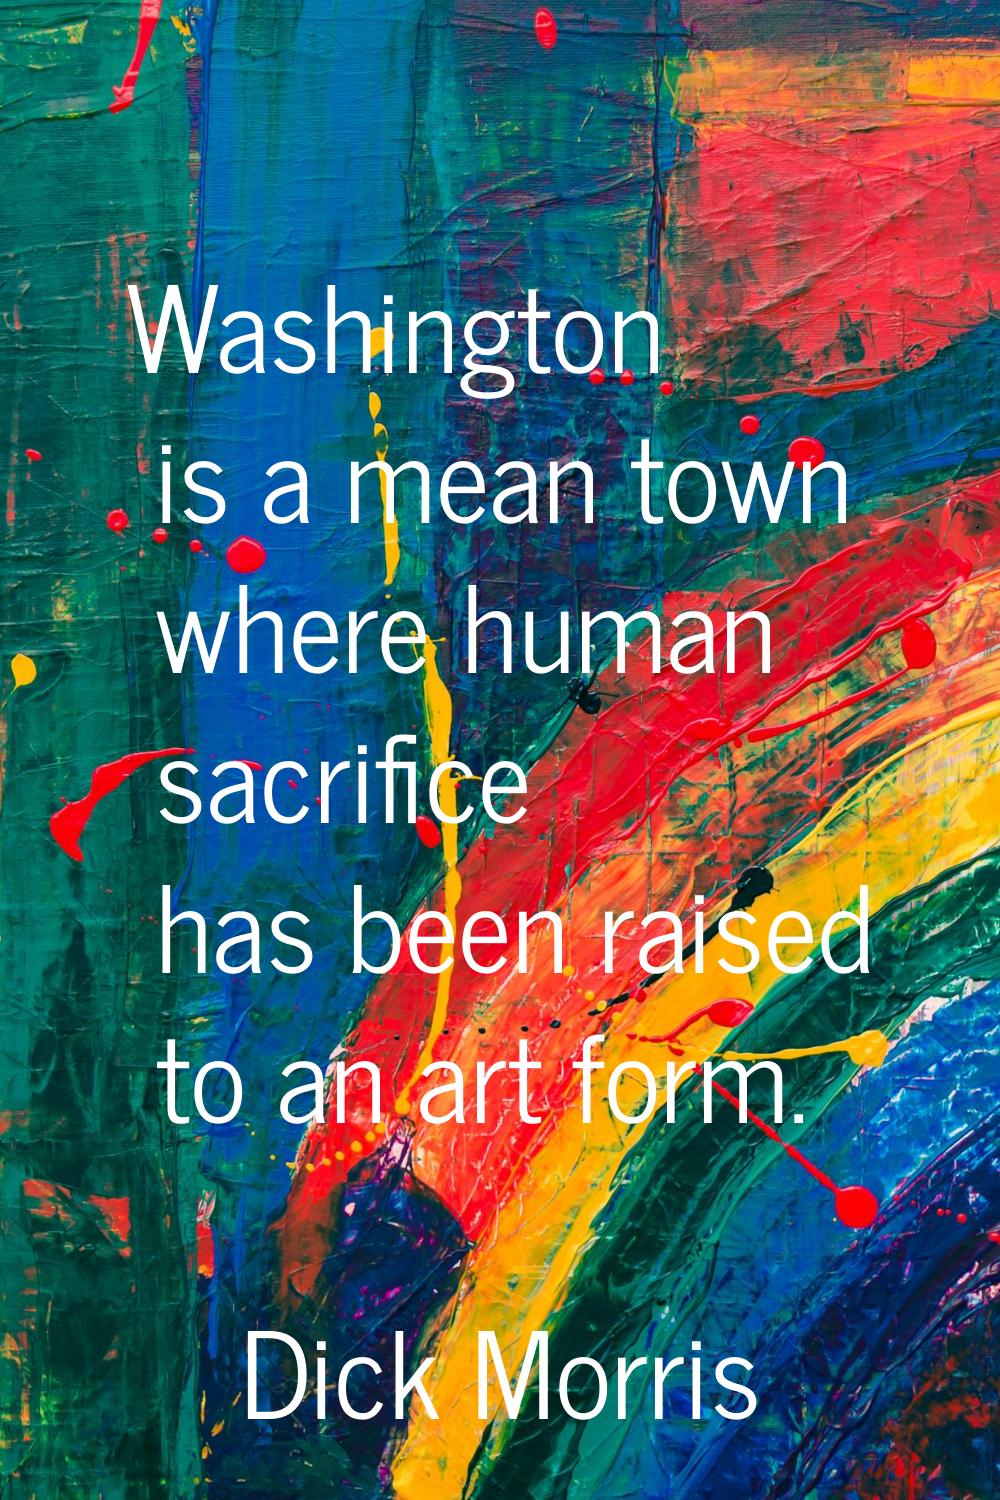 Washington is a mean town where human sacrifice has been raised to an art form.